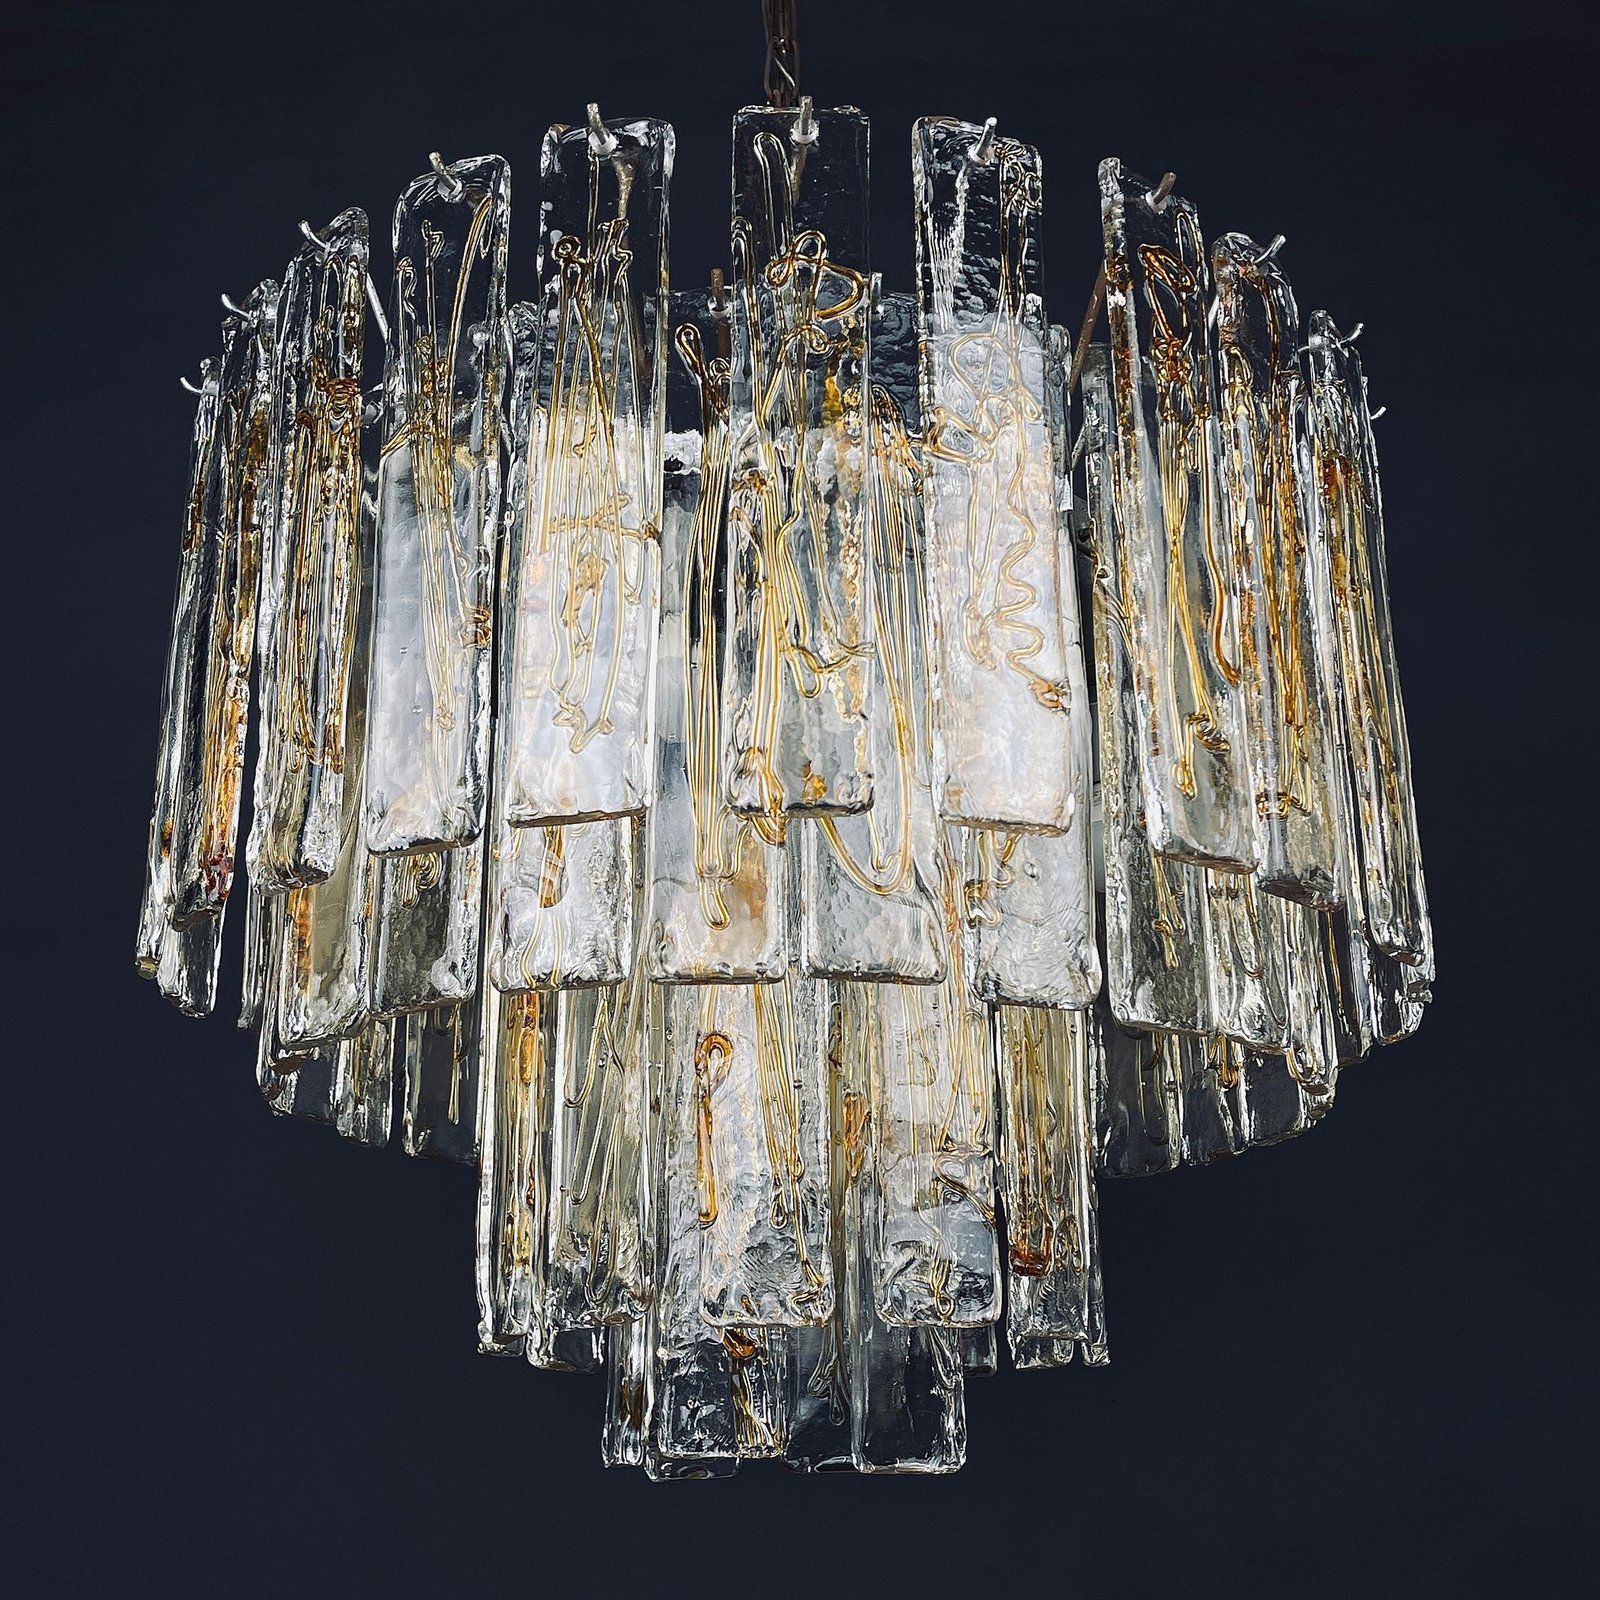 Large Murano glass chandelier by La Murrina Italy 1970s Vintage italian lighting 66 murano plates